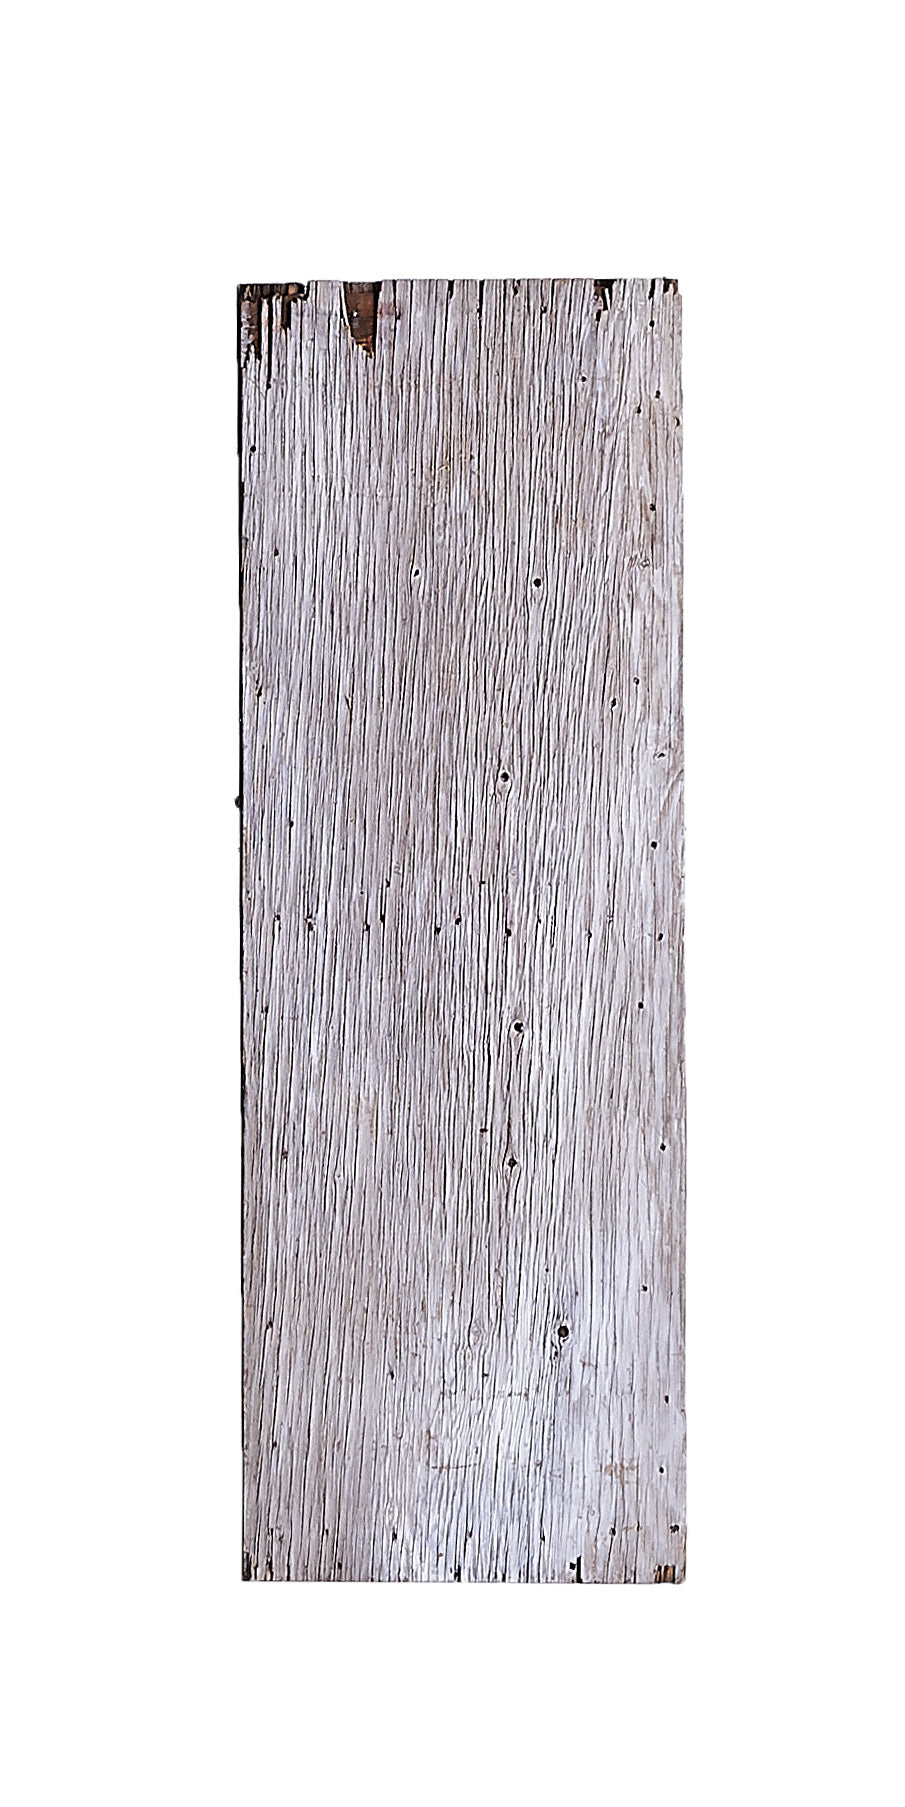 Lg Worn White Painted Wood